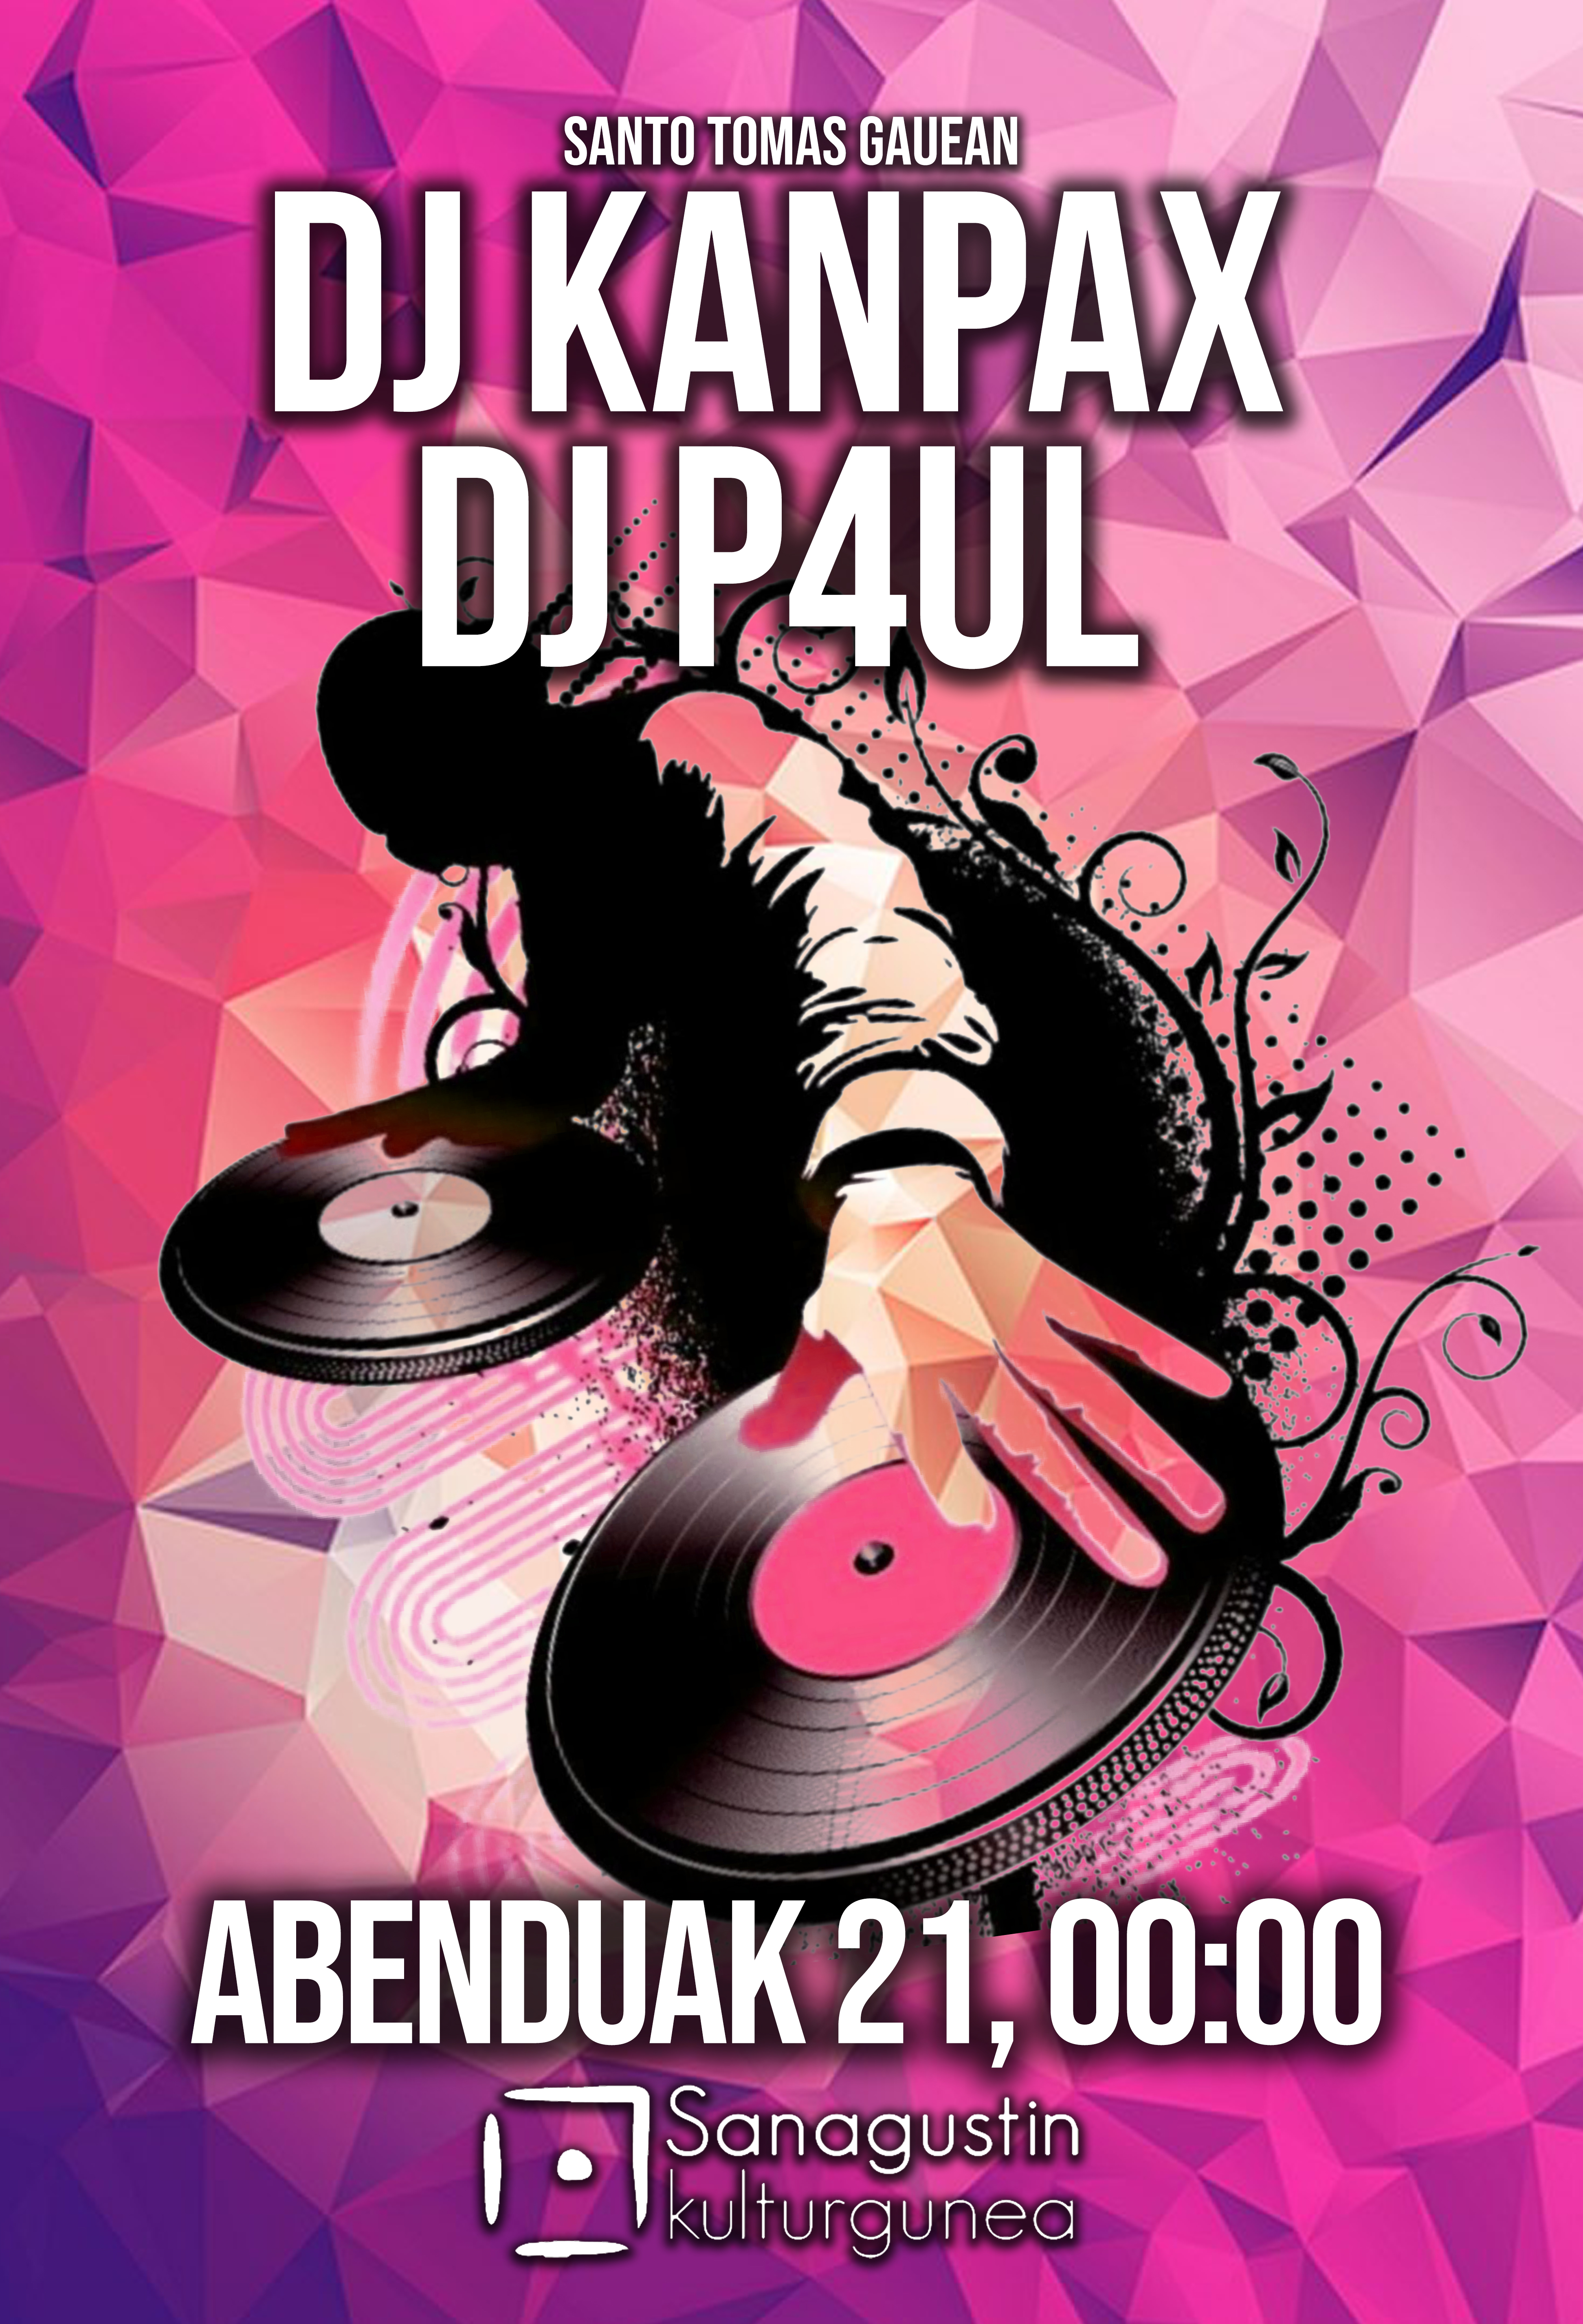 DJ Kanpax eta DJ P4ul